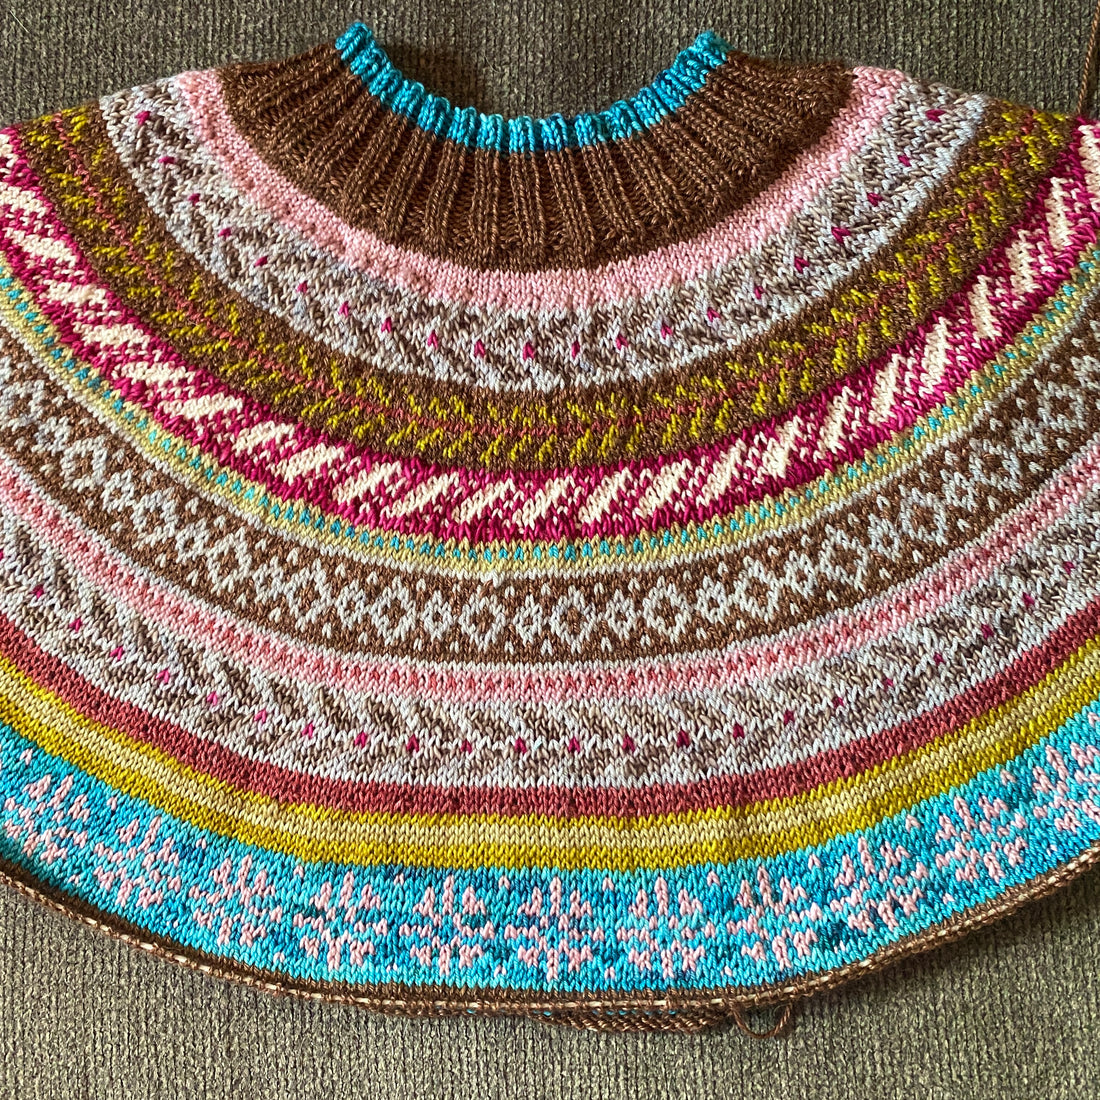 Full Colorwork Sweater!